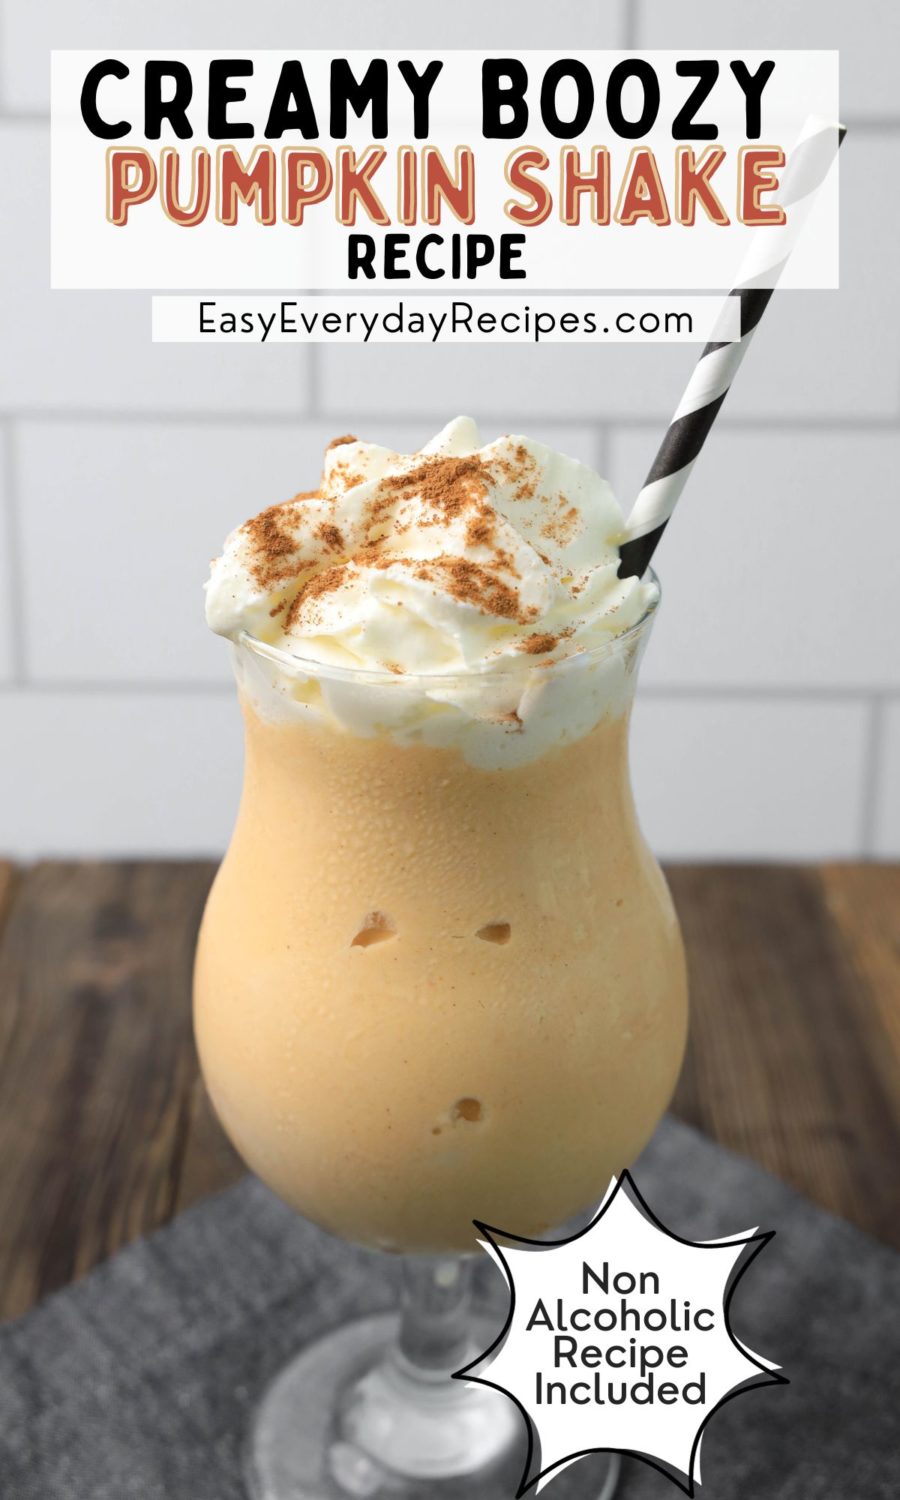 Creamy boozy pumpkin shake recipe.